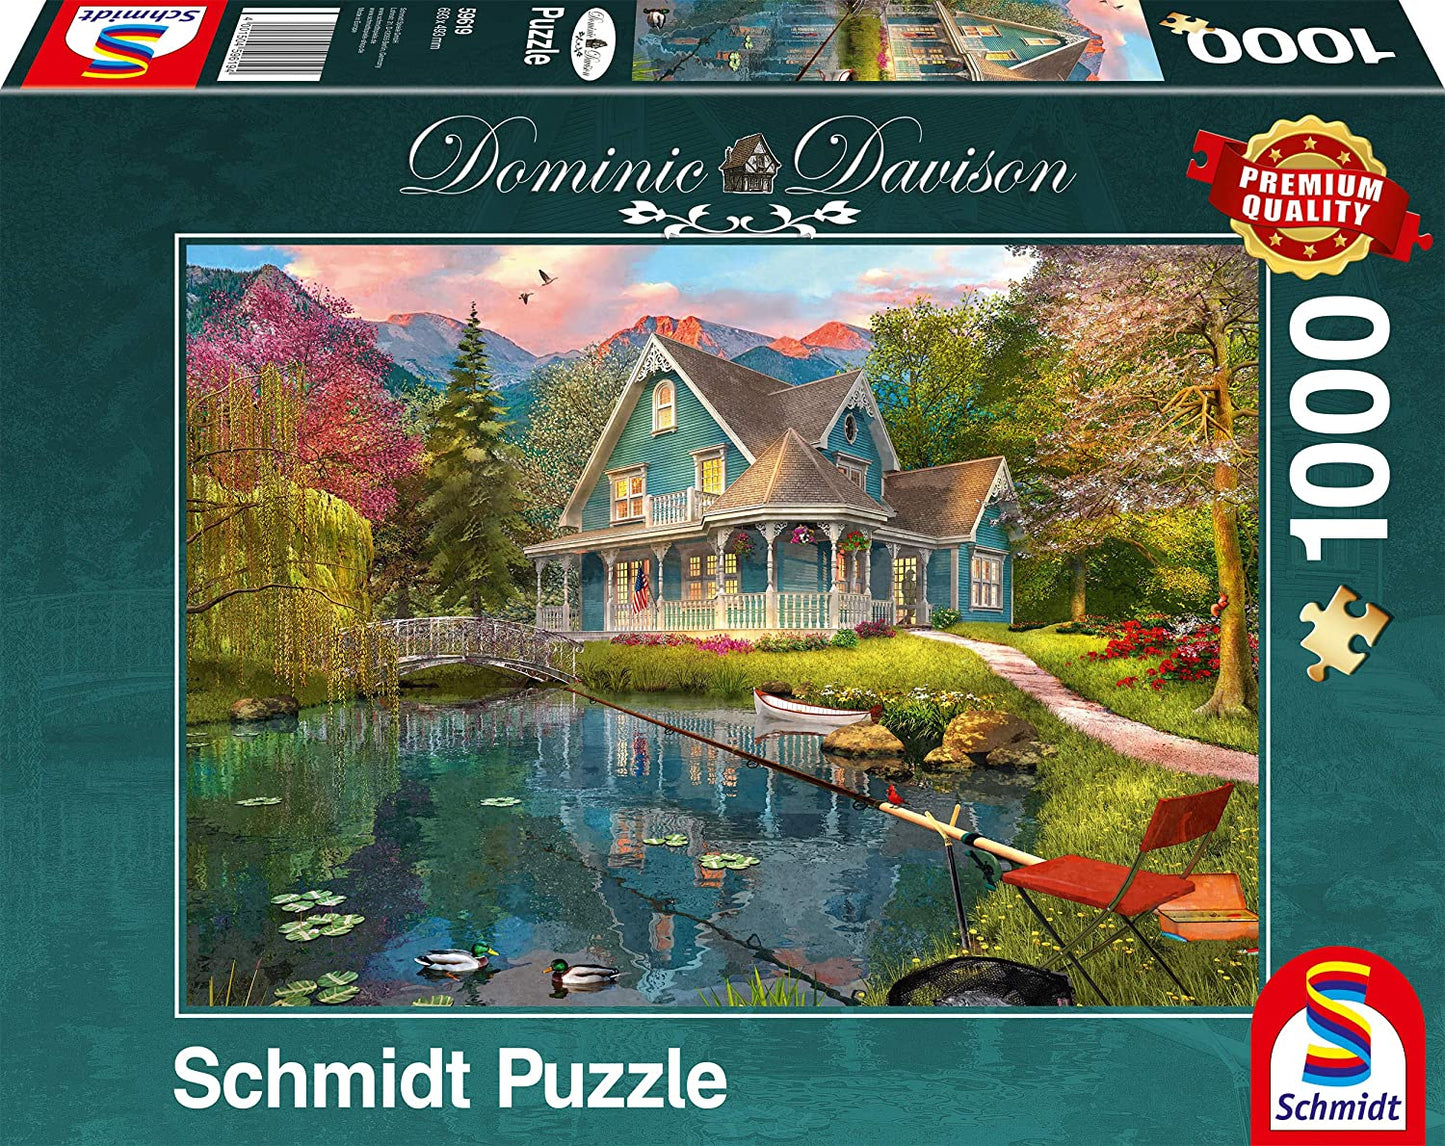 Schmidt - Dominic Davison, House by the Lake - 1000 Piece Jigsaw Puzzle